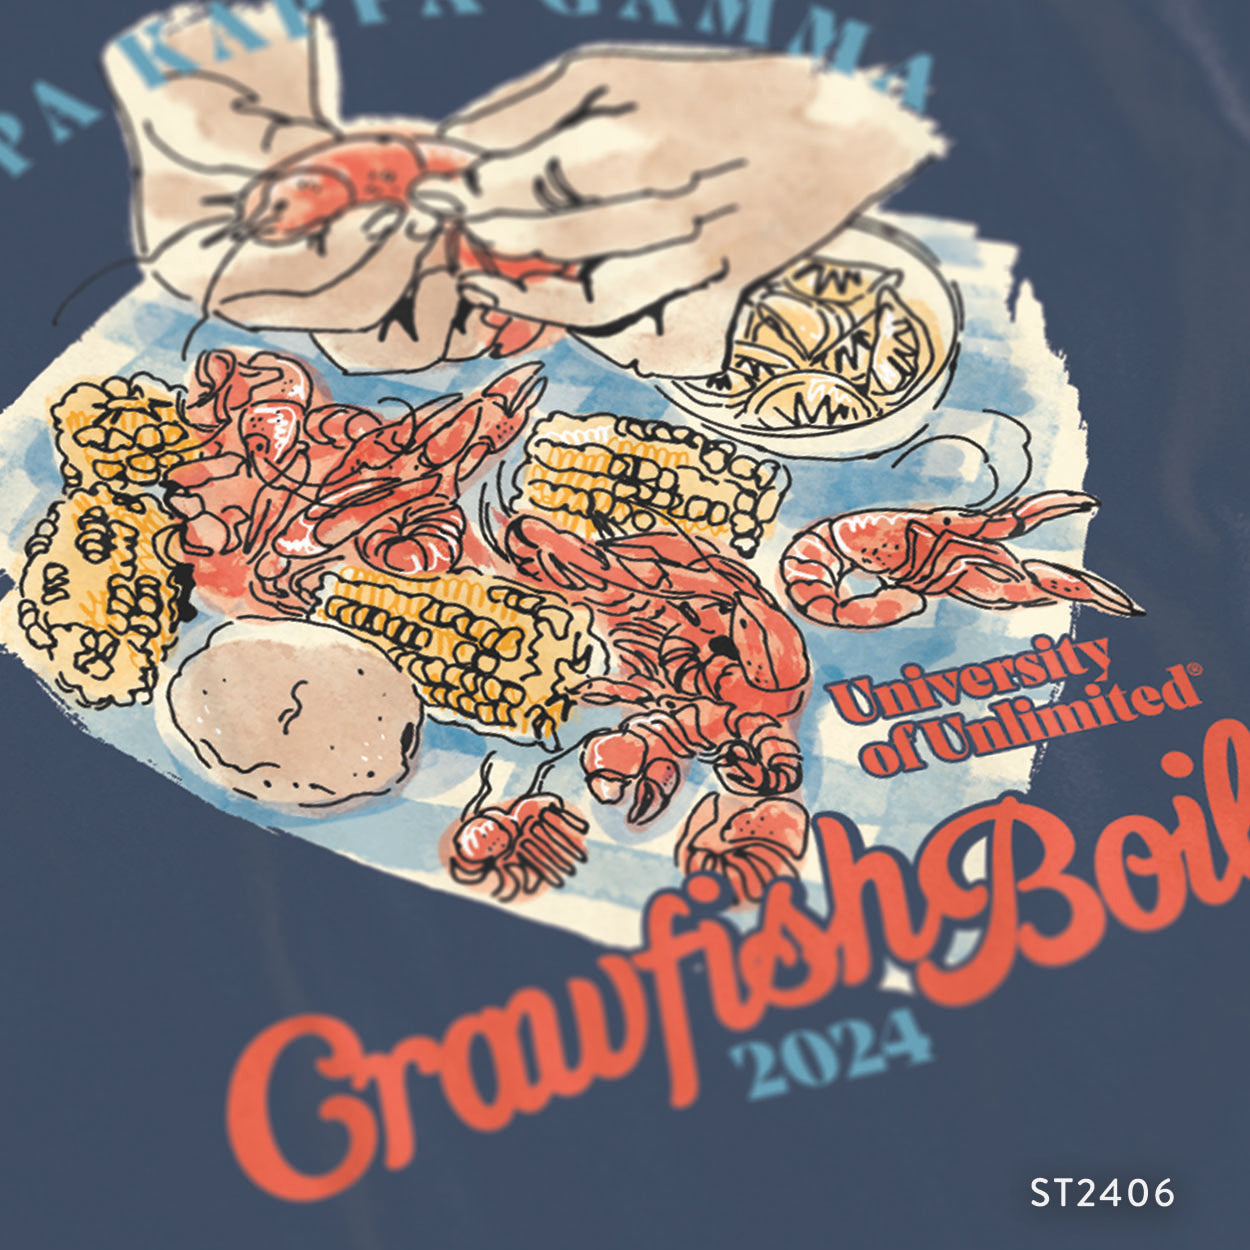 Kappa Kappa Gamma Crawfish Boil T-Shirt Design